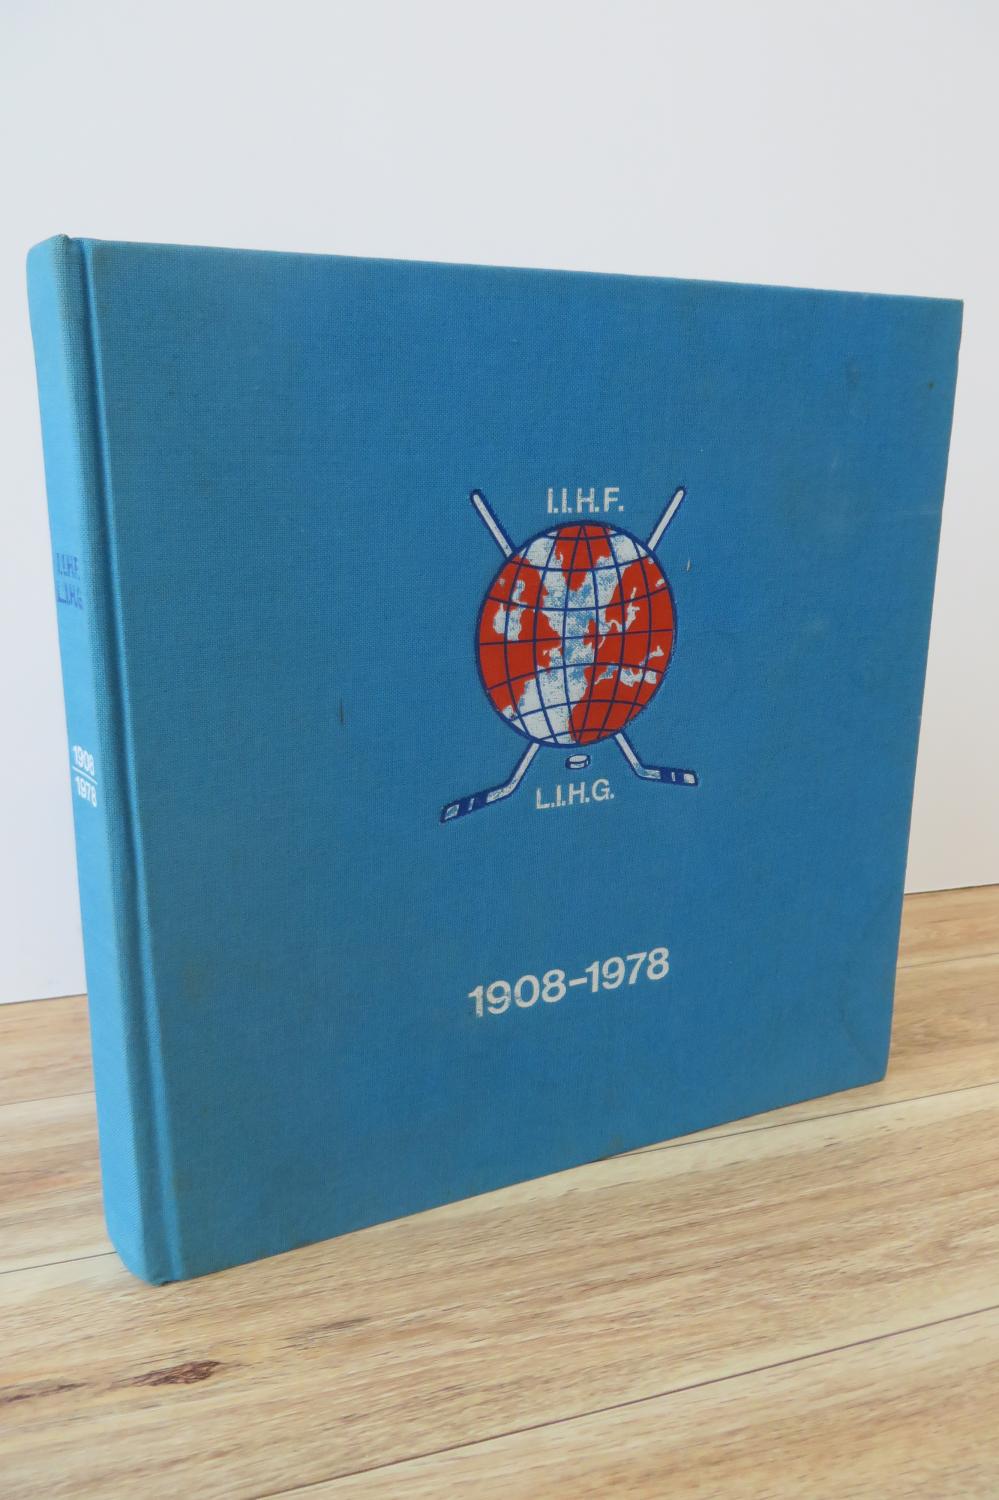 1908-1978 70 Jahre LIHG/IIHF / 70 Years of L.I.H.G./I.I.H.F. The Seventy-Year History of the International Ice Hockey Federation